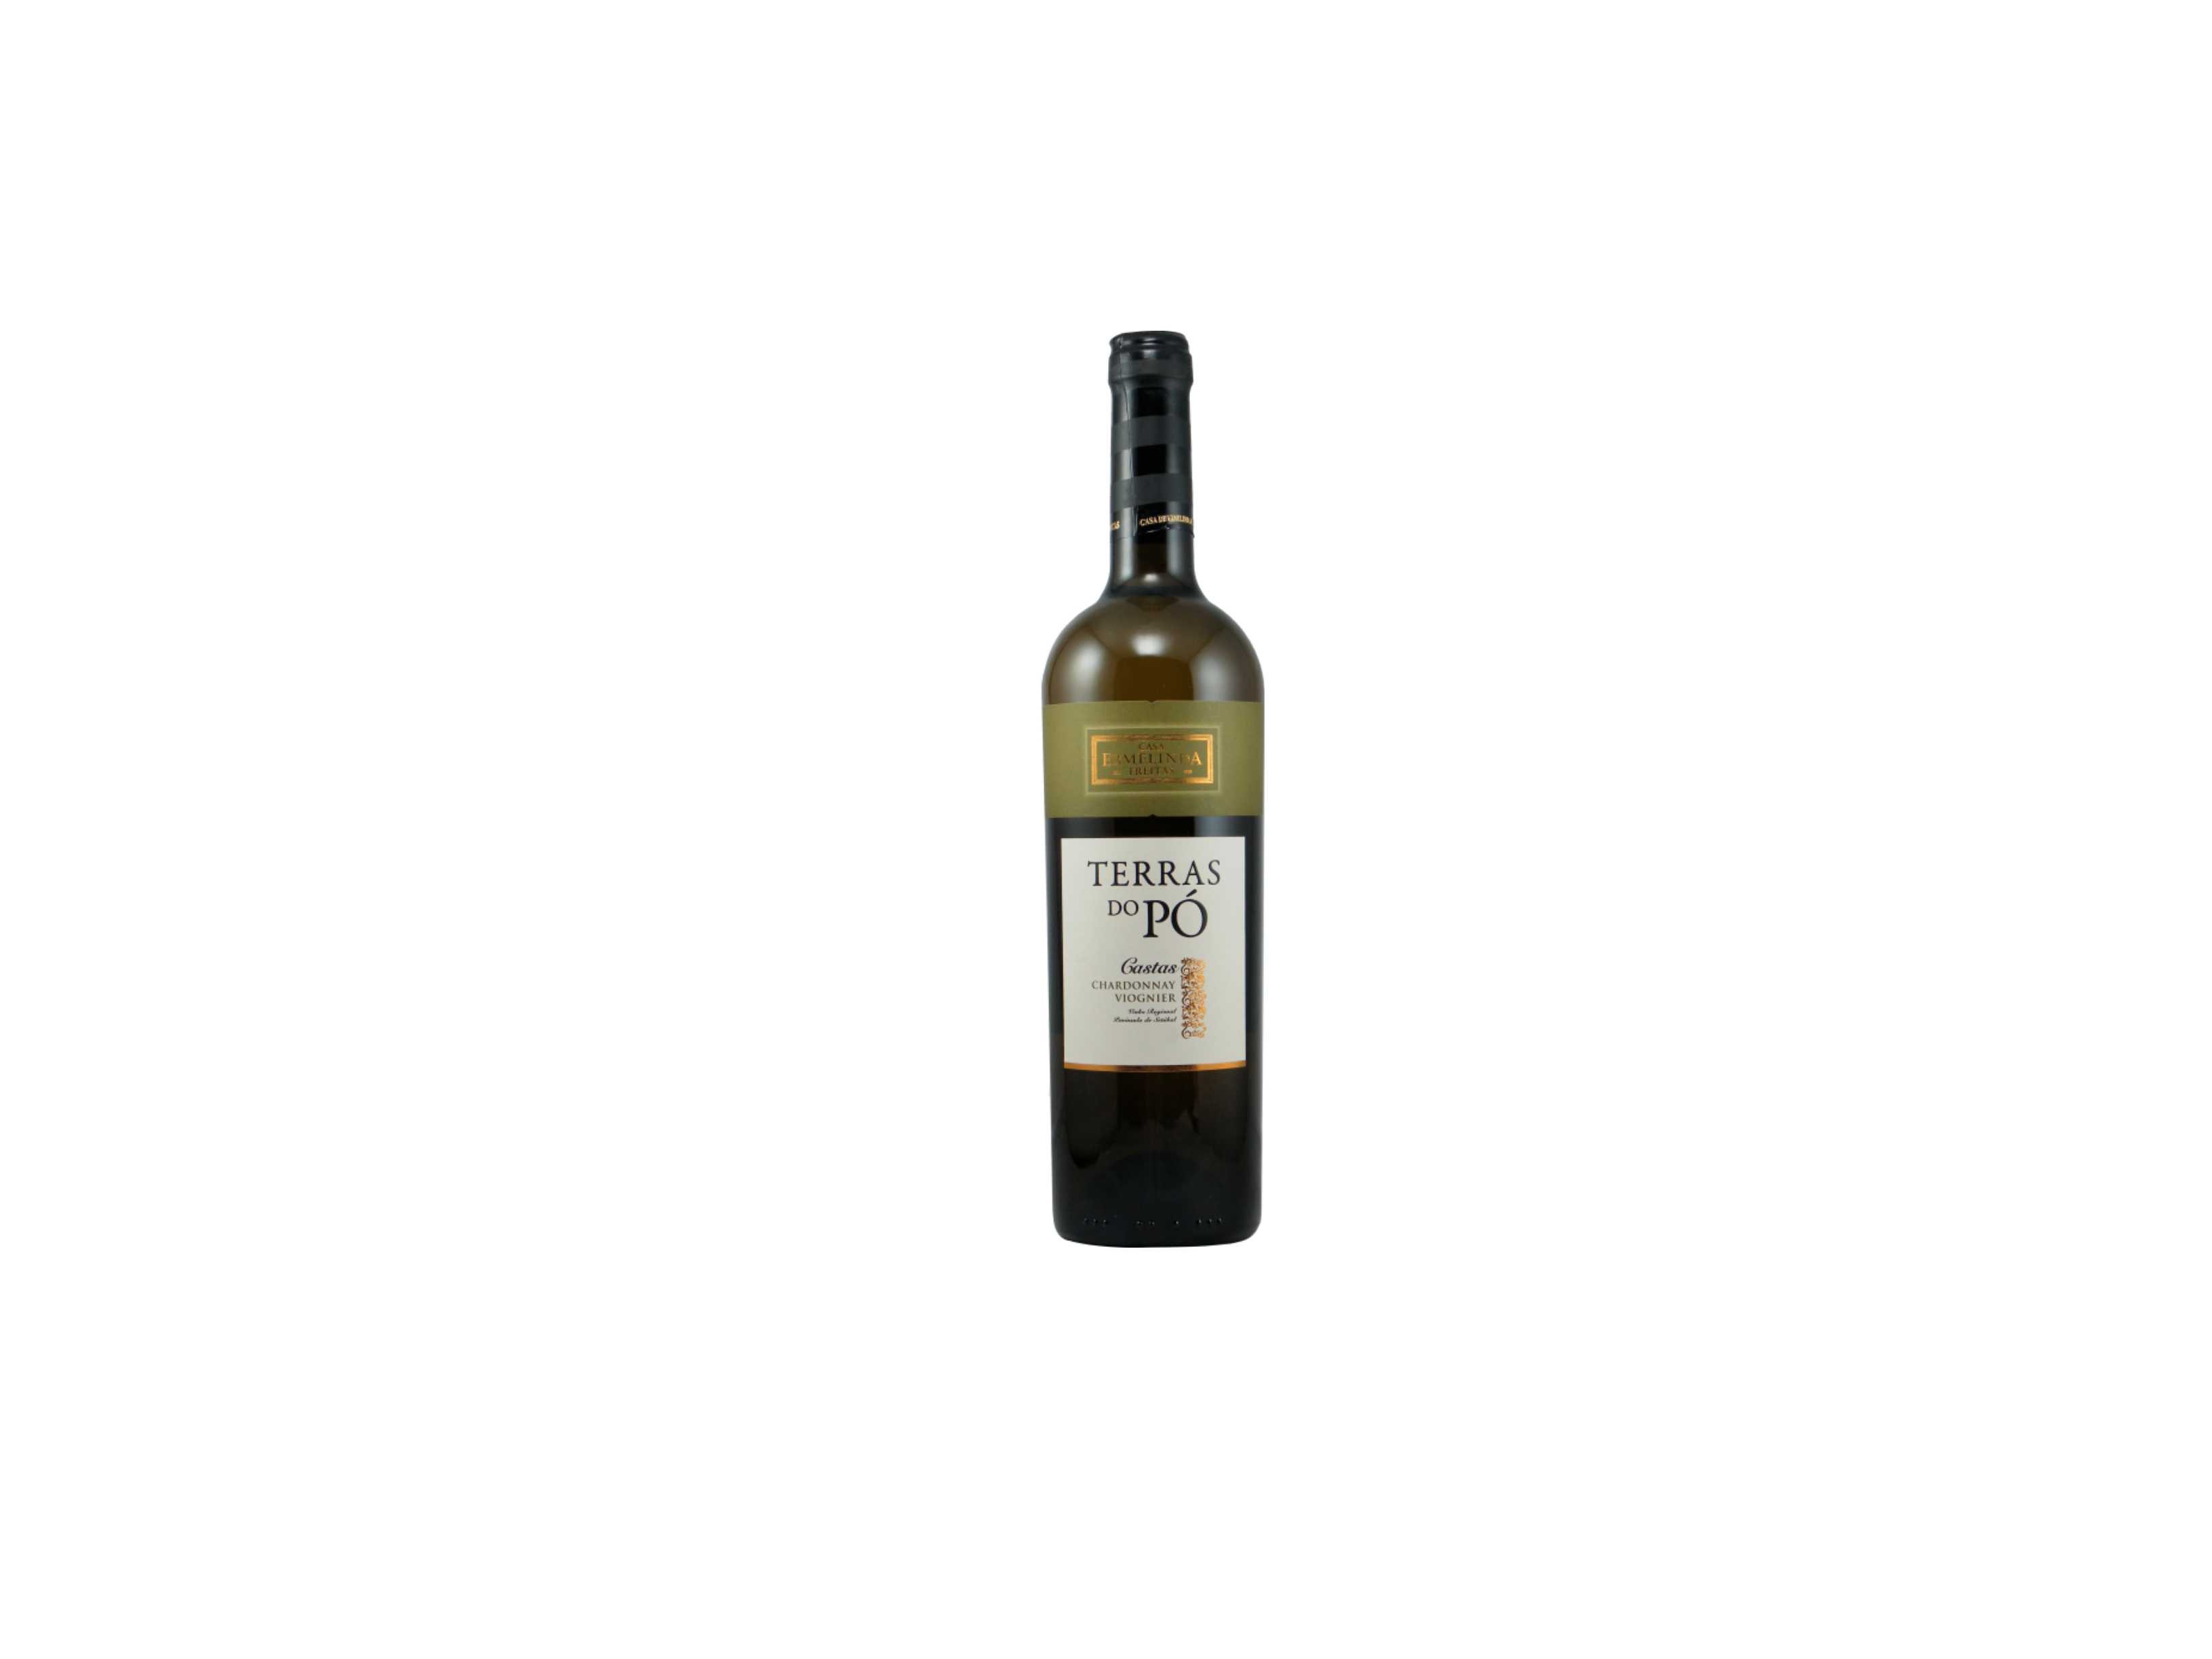 Terras do Pó Chardonnay & Viognier 2017 (4,68€)